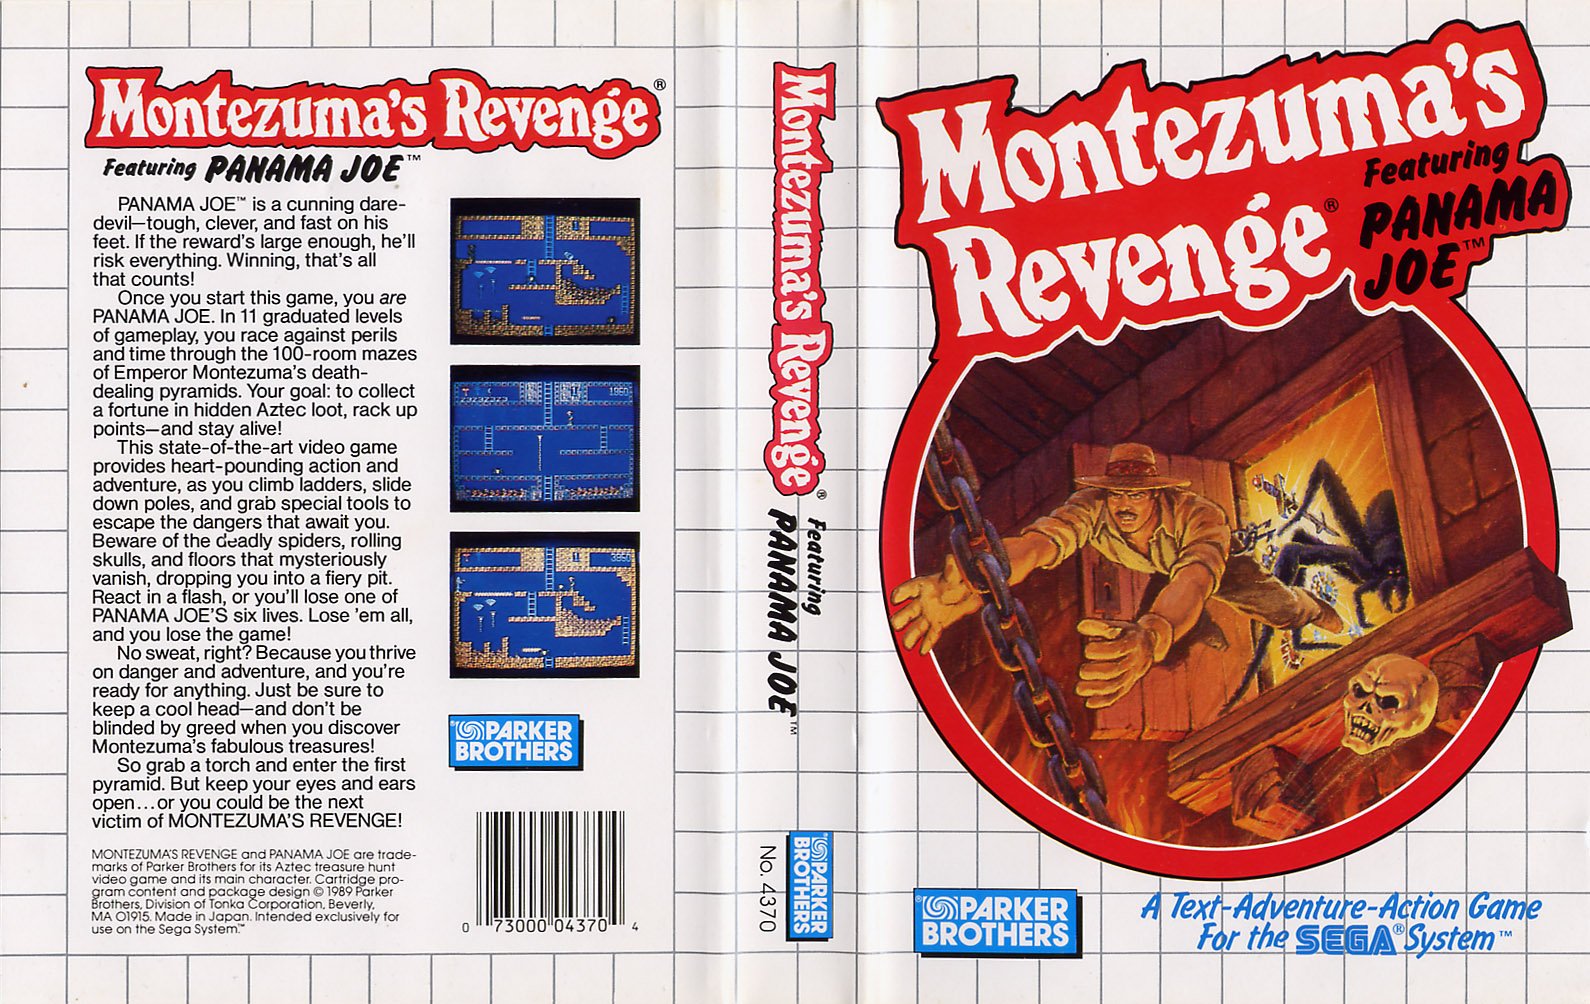 Caratula de Montezuma's Revenge featuring Panama Joe para Sega Master System